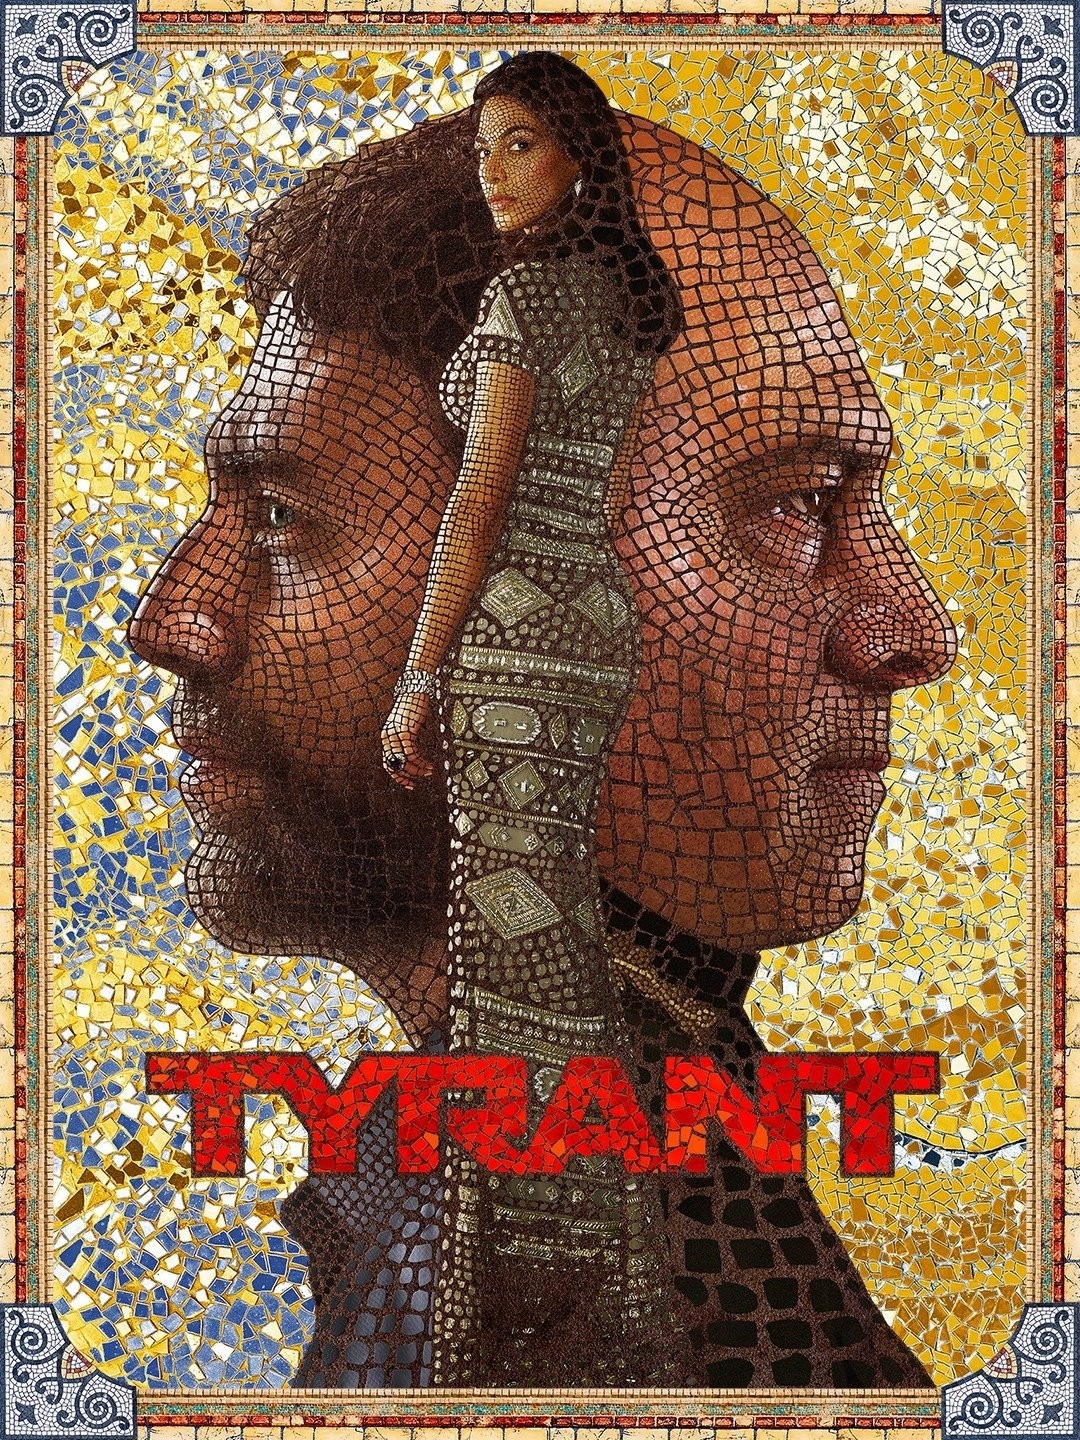 Love Tyrant (TV Mini Series 2017) - IMDb